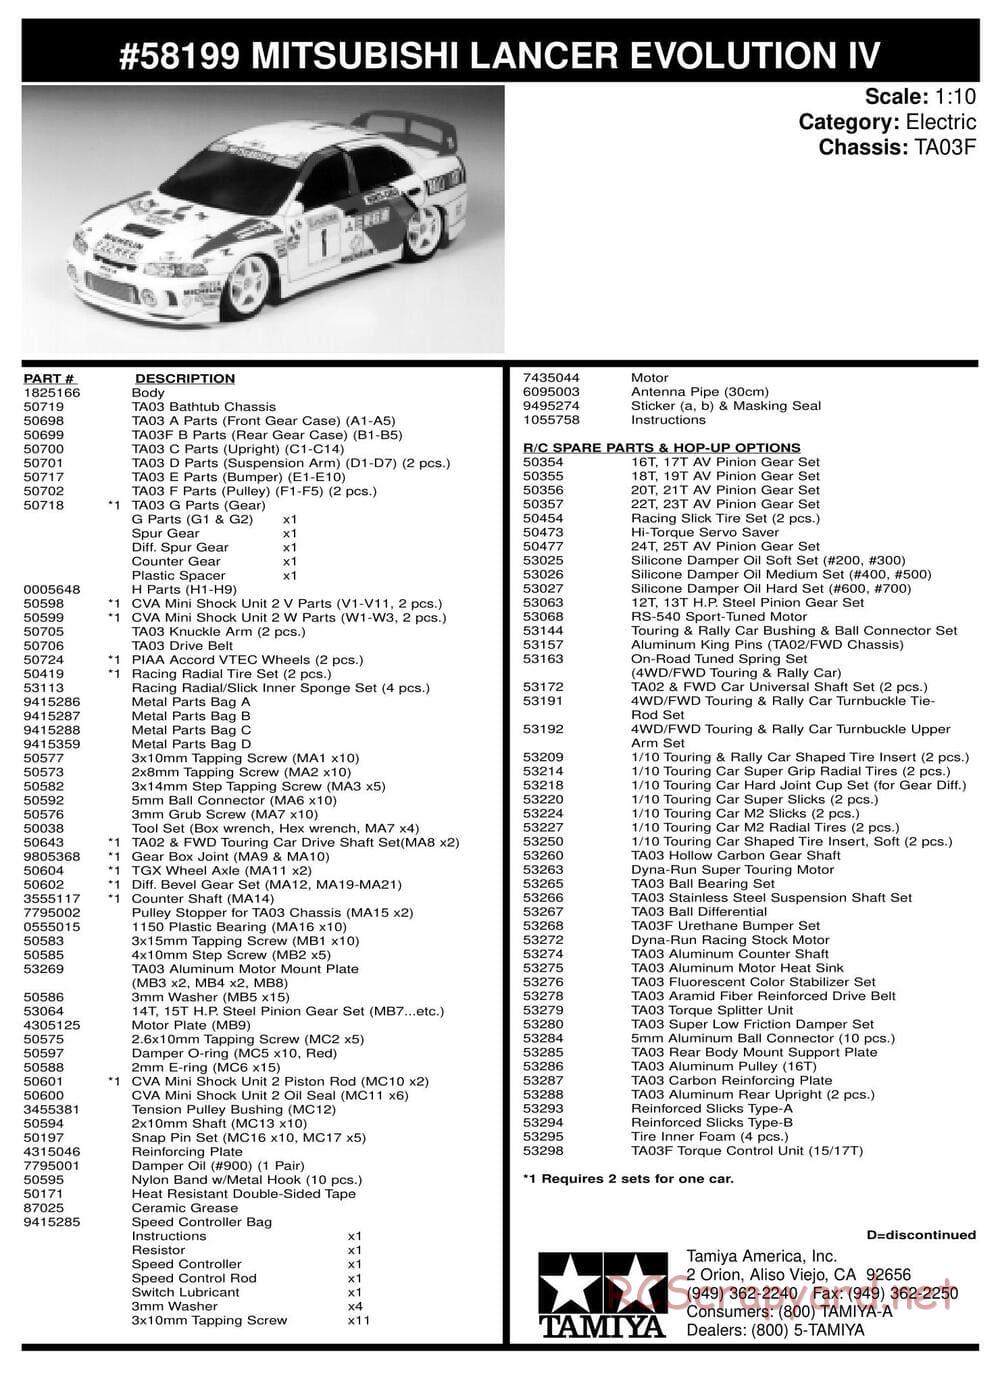 Tamiya - Mitsubishi Lancer Evolution IV - TA-03F Chassis - Manual - Page 25